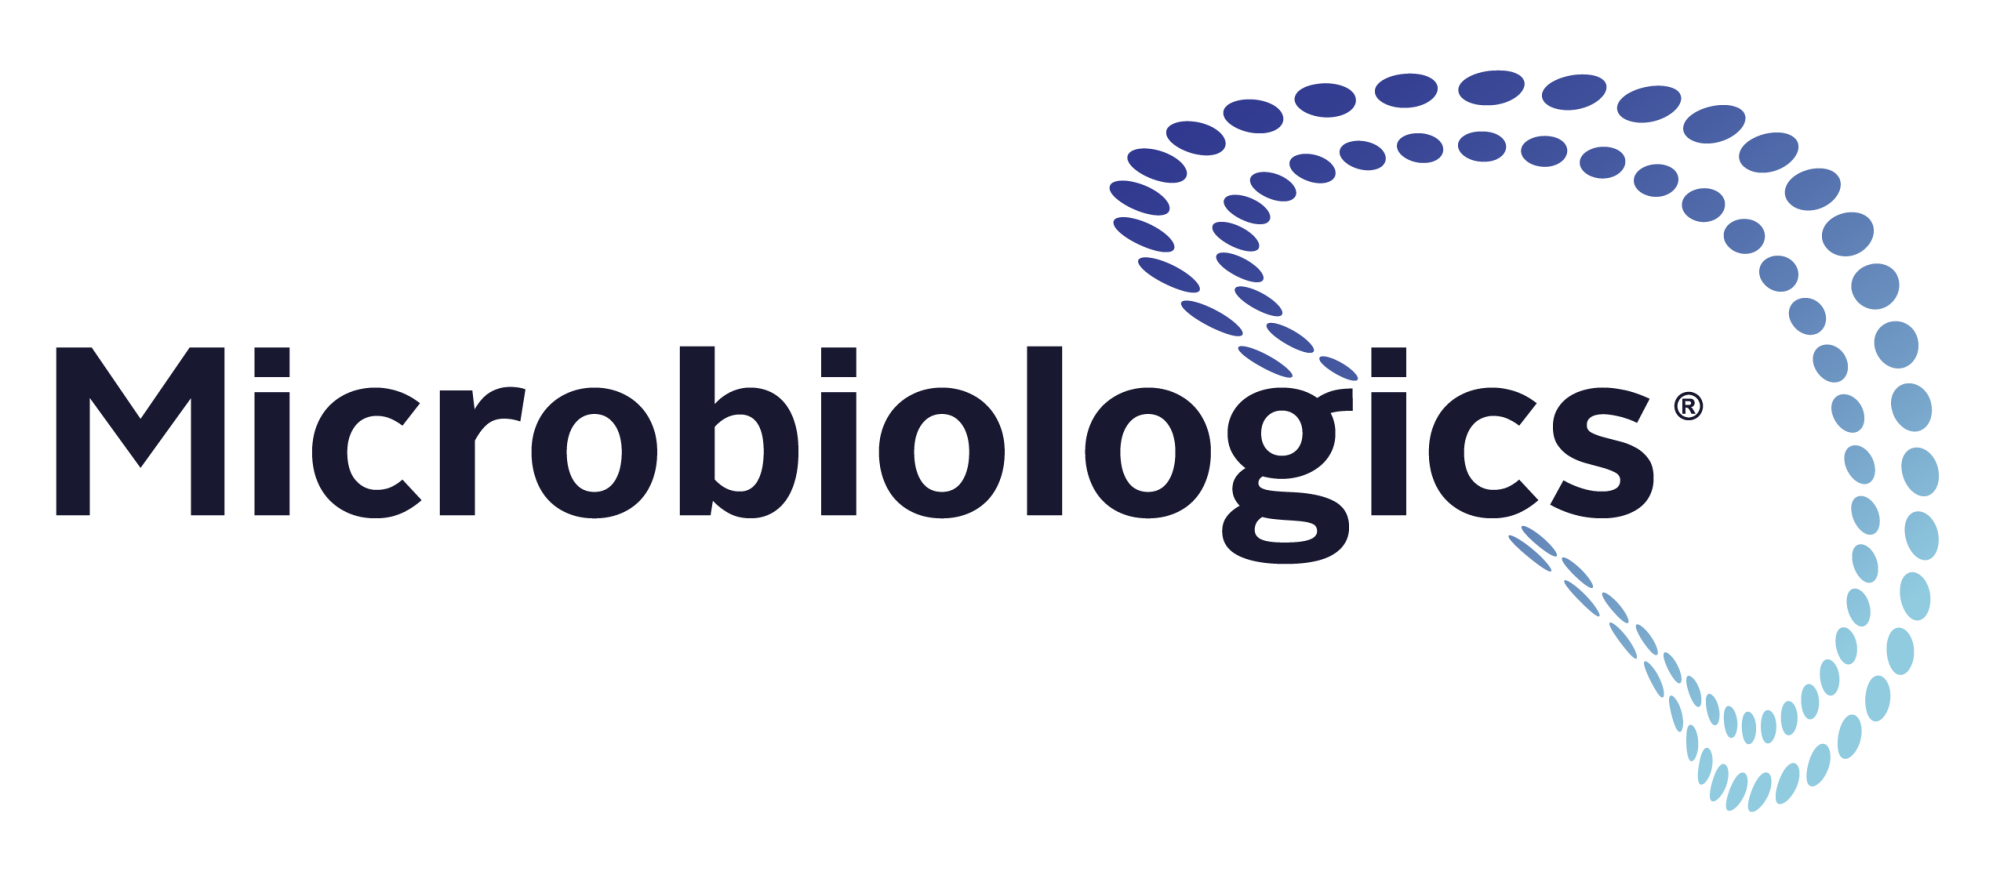 www.microbiologics.com